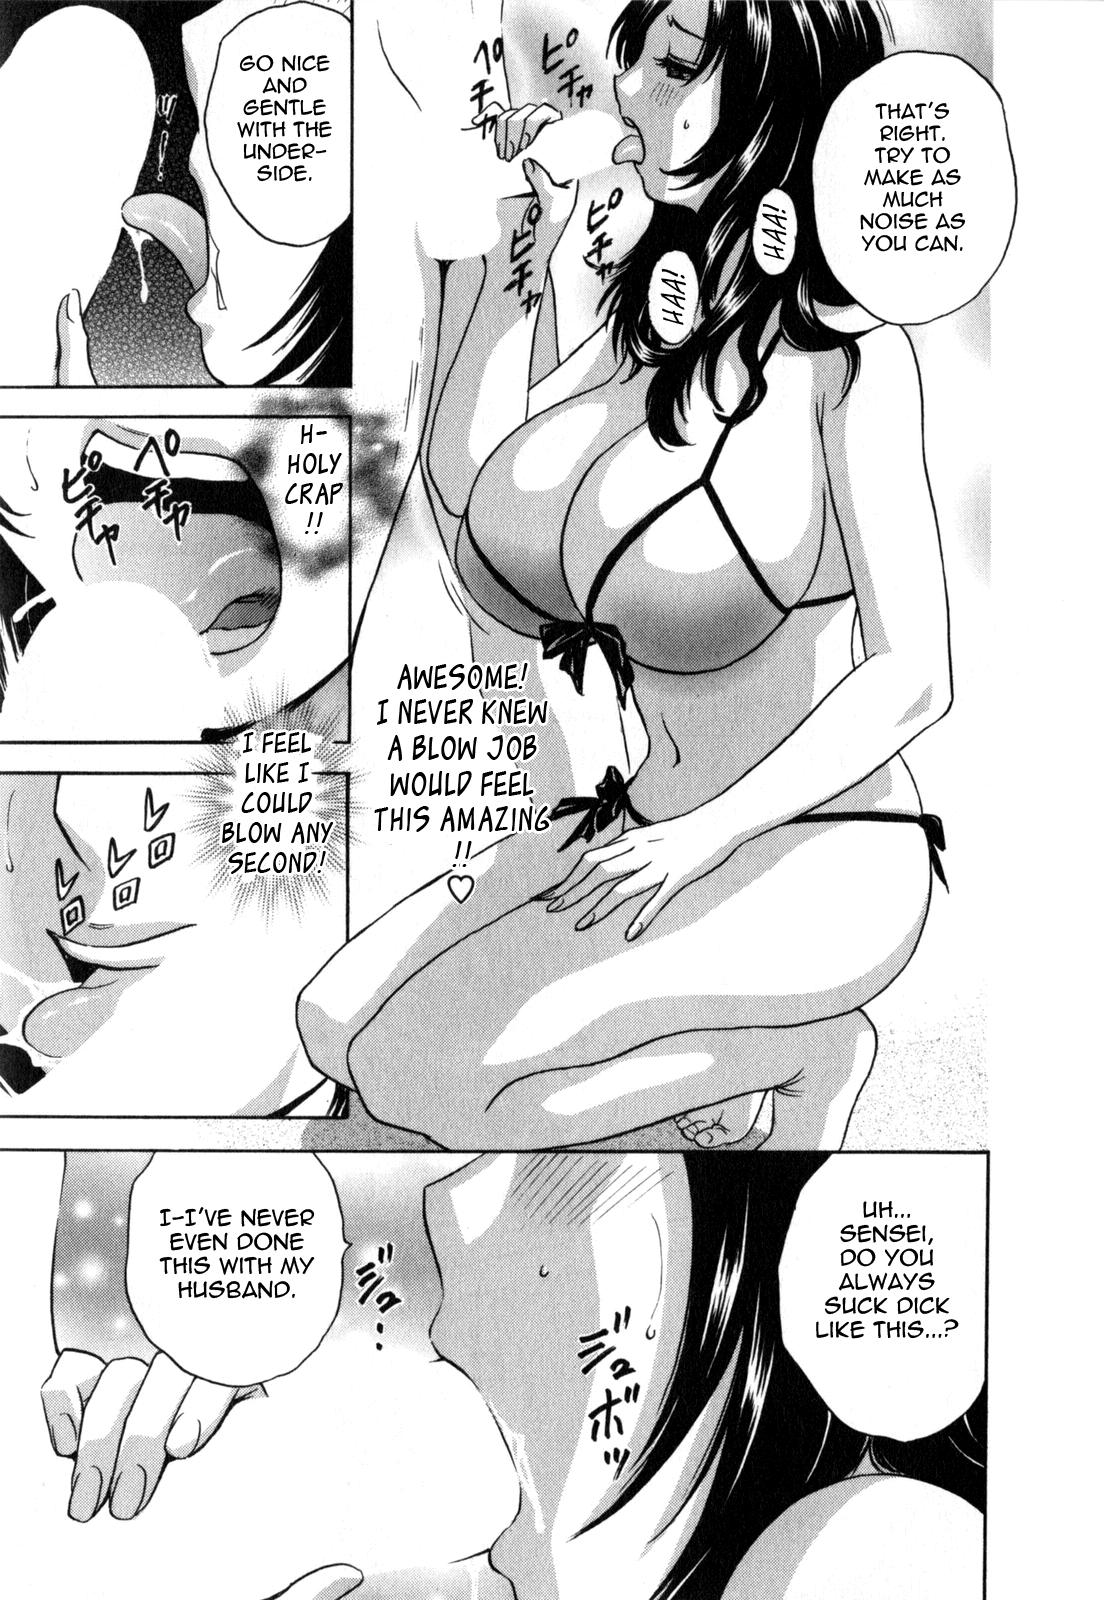 [Hidemaru] Life with Married Women Just Like a Manga 1 - Ch. 1-8 [English] {Tadanohito} 17